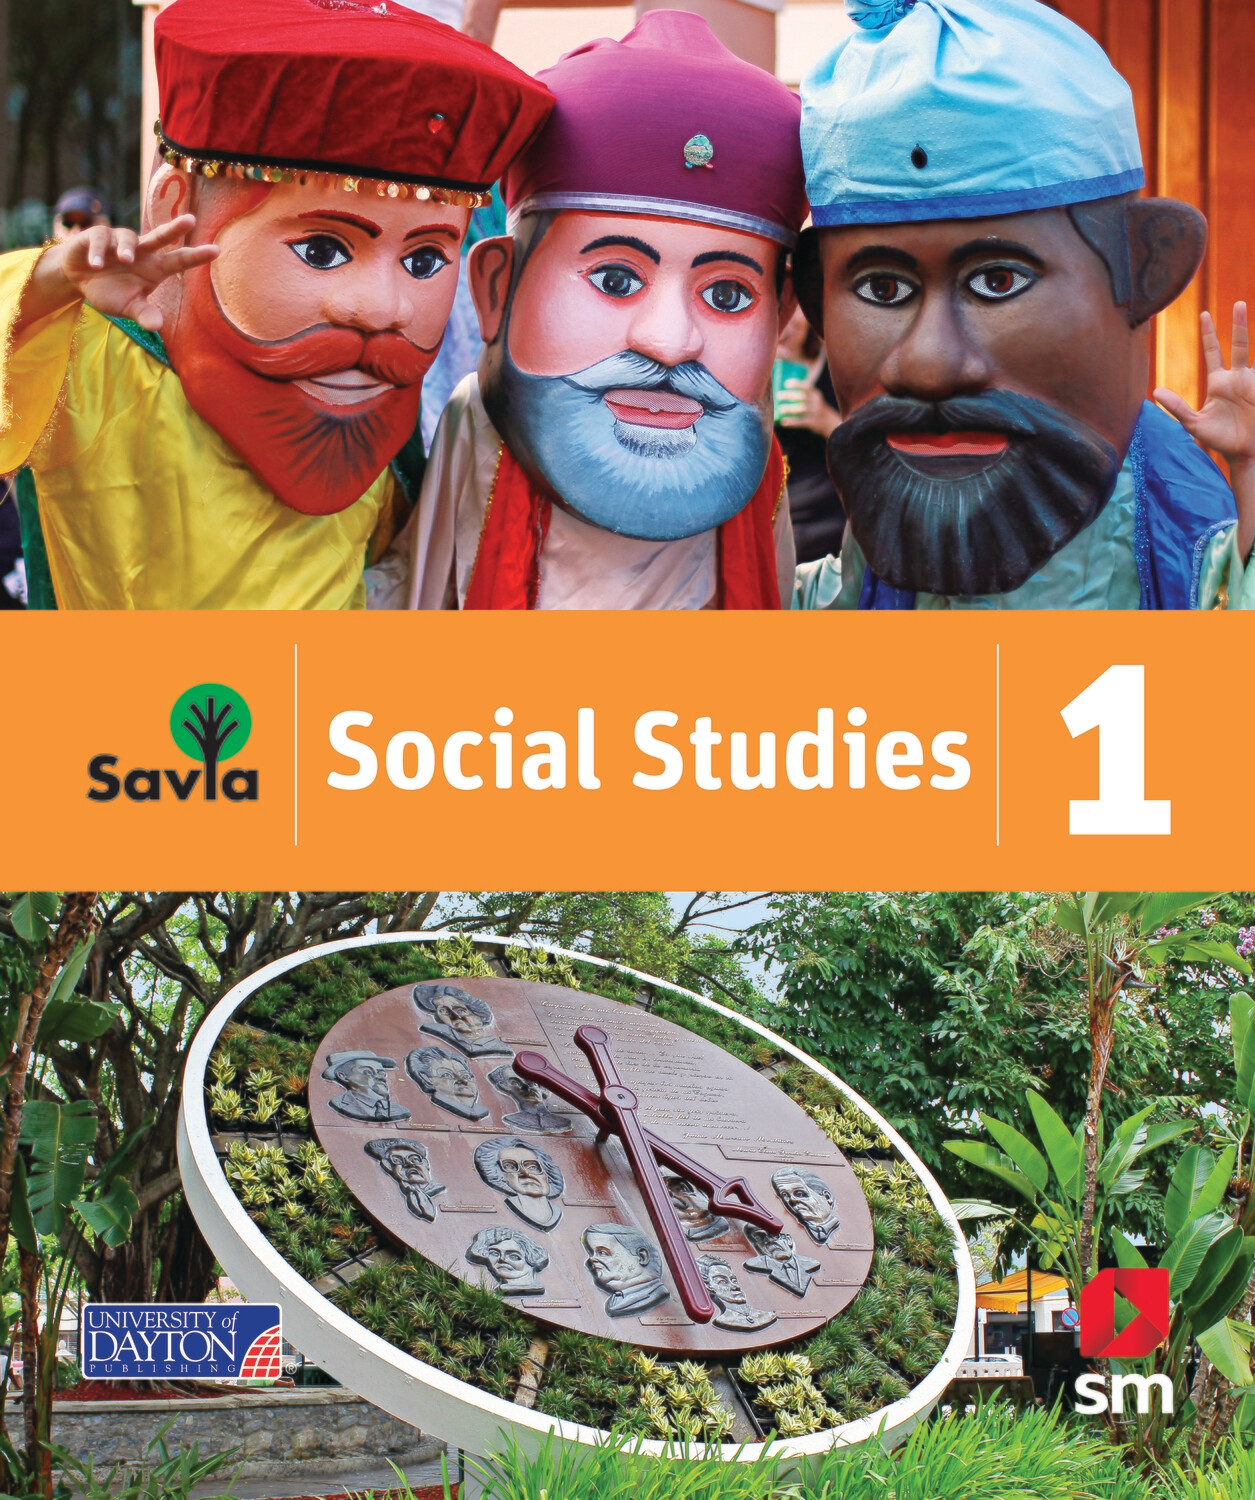 SECOND GRADE - SAVIA SOCIAL STUDIES 1 TEXT, VOCABULARY BOOK, AND DIGITAL ACCESS - SM - 2020 - ISBN 9781644862537